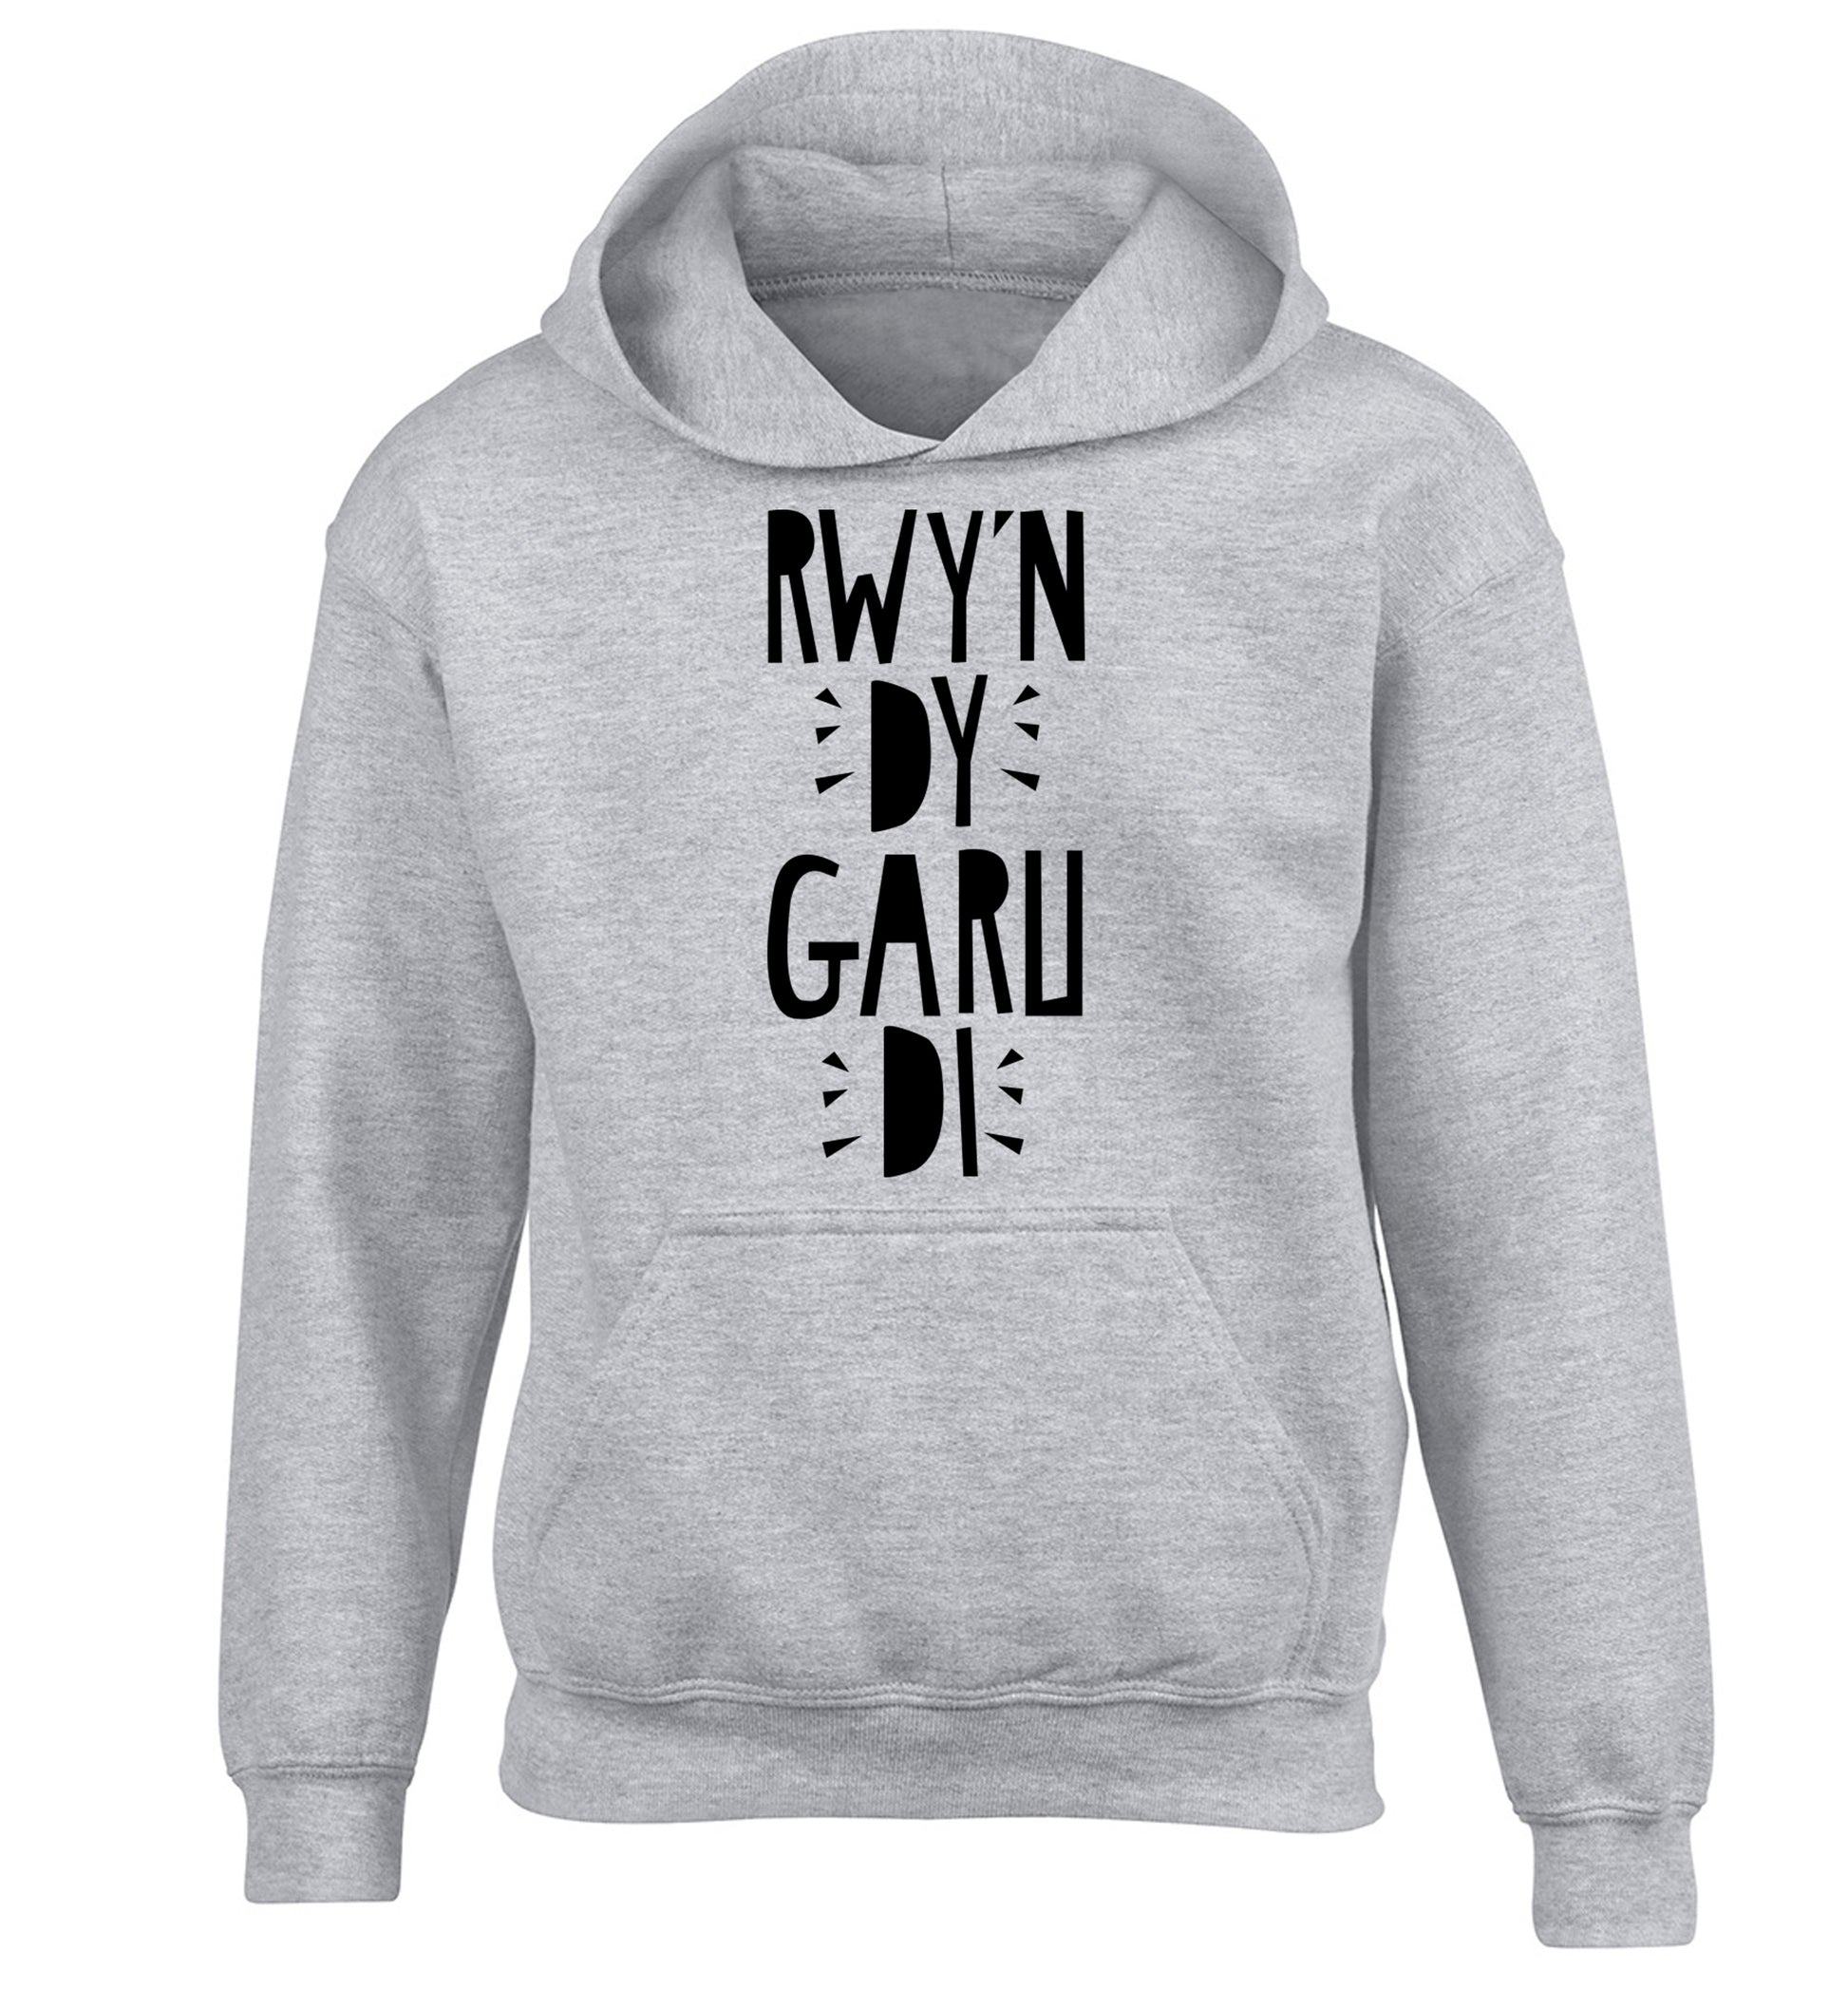 Rwy'n dy garu di - I love you children's grey hoodie 12-13 Years